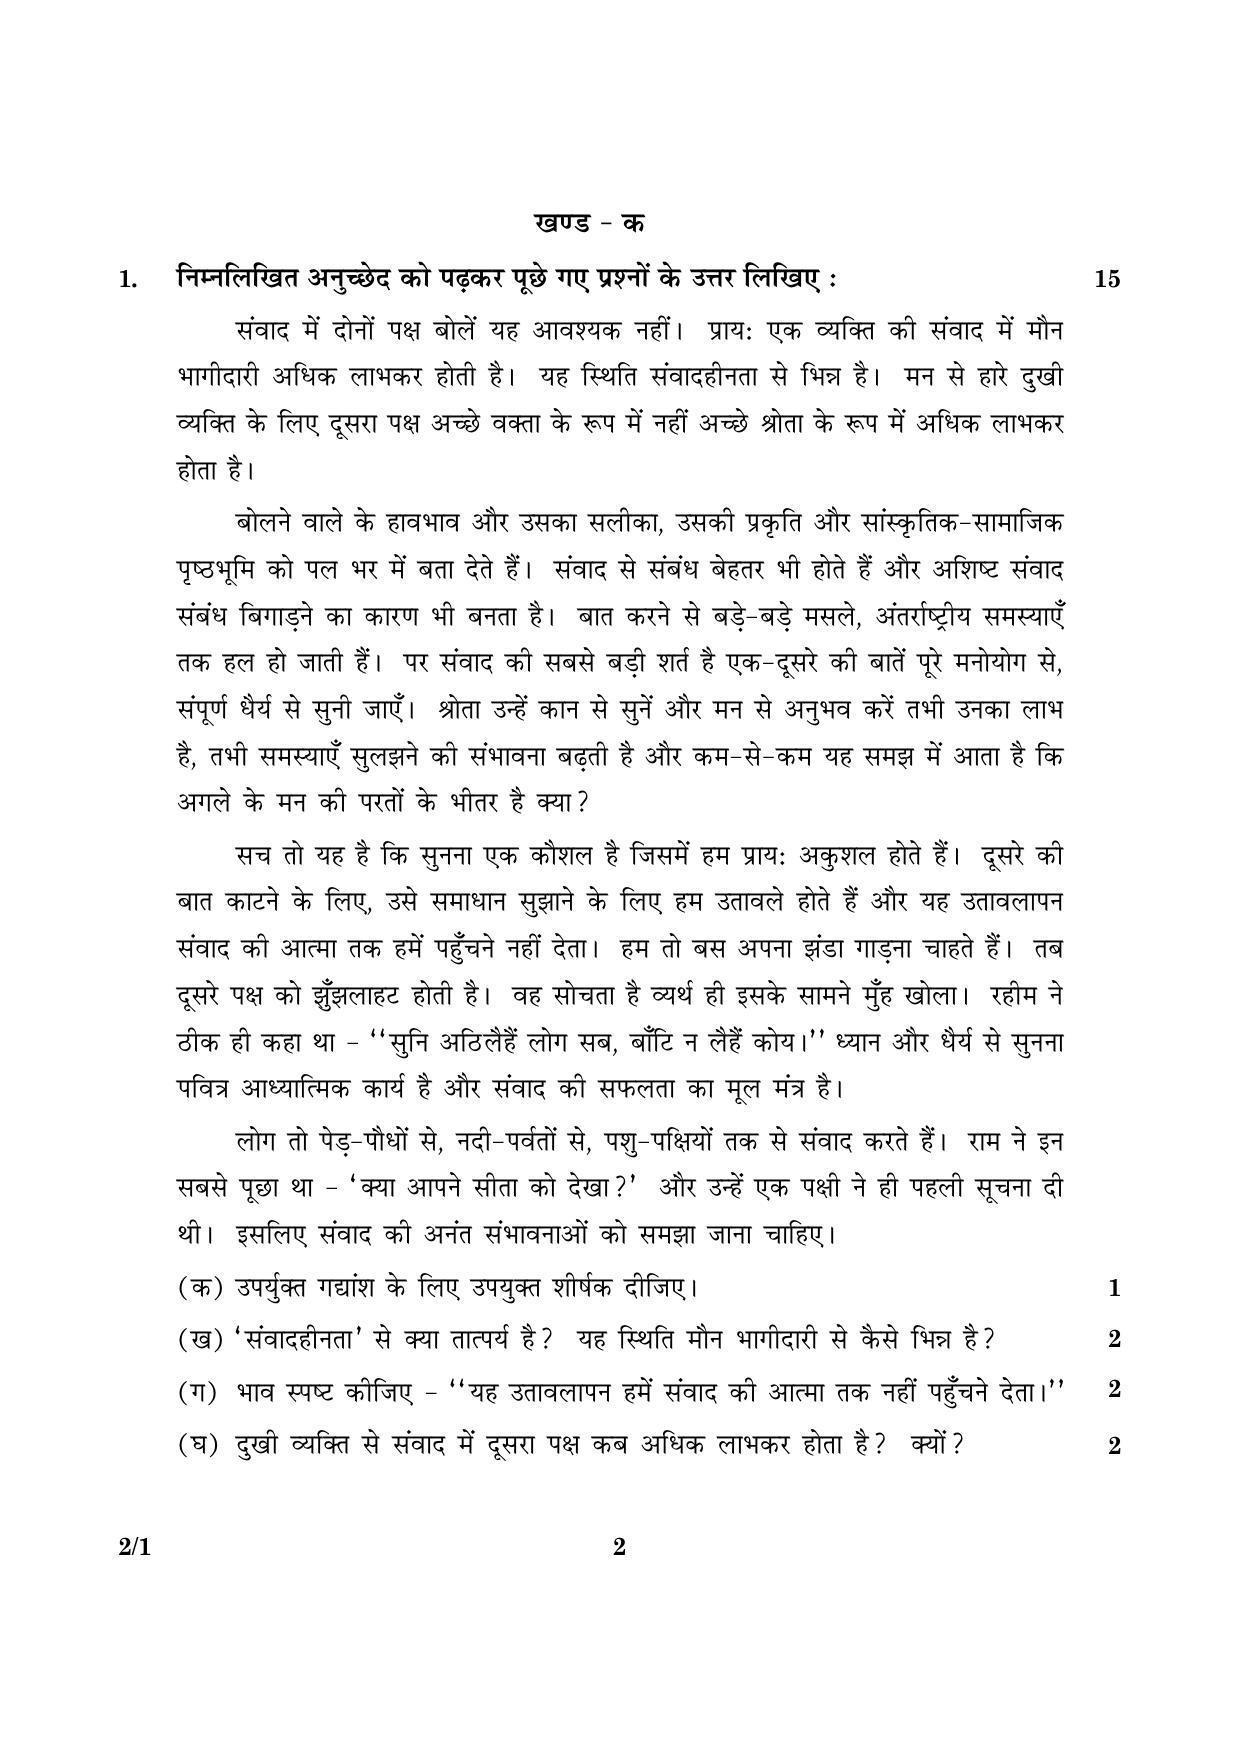 CBSE Class 12 002 Set 1 Hindi (Core) 2016 Question Paper - Page 2